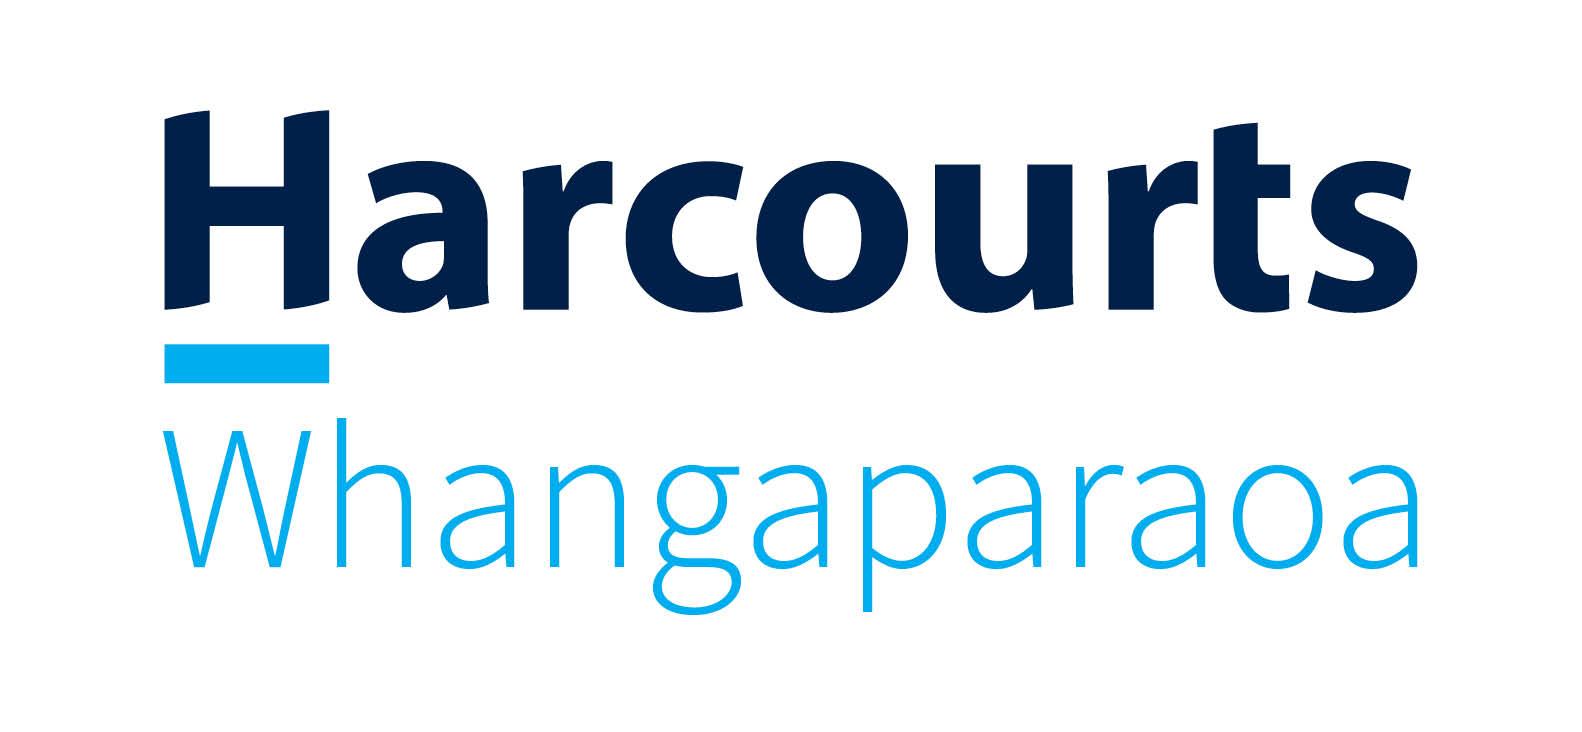 Harcourts Logo - Harcourts Whangaparaoa Stacked blue logo